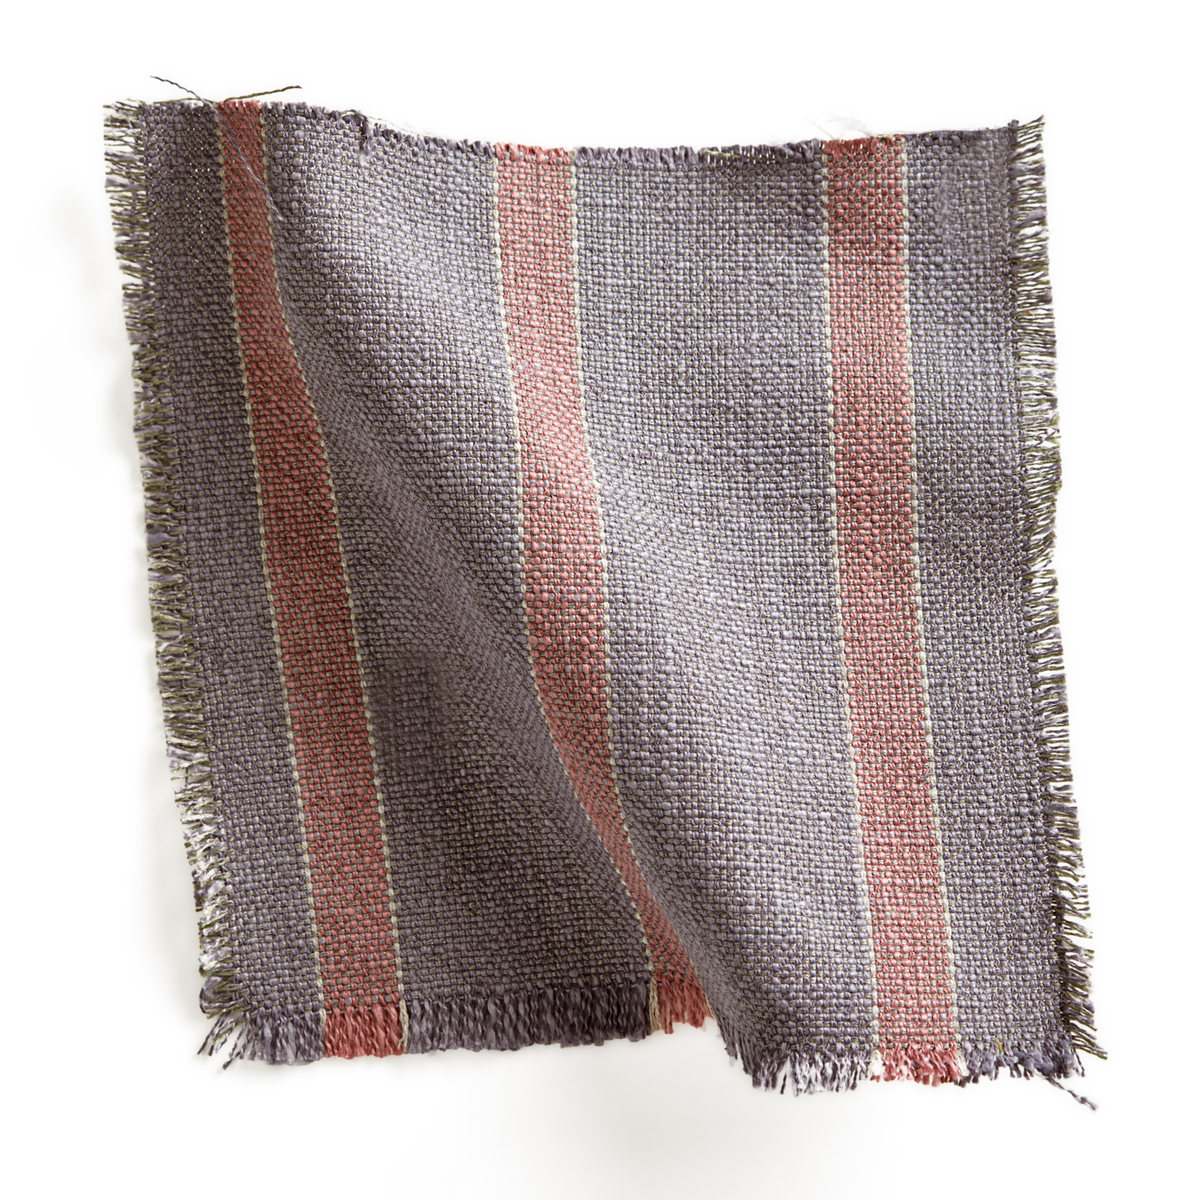 Market Stripe Fabric in Plum